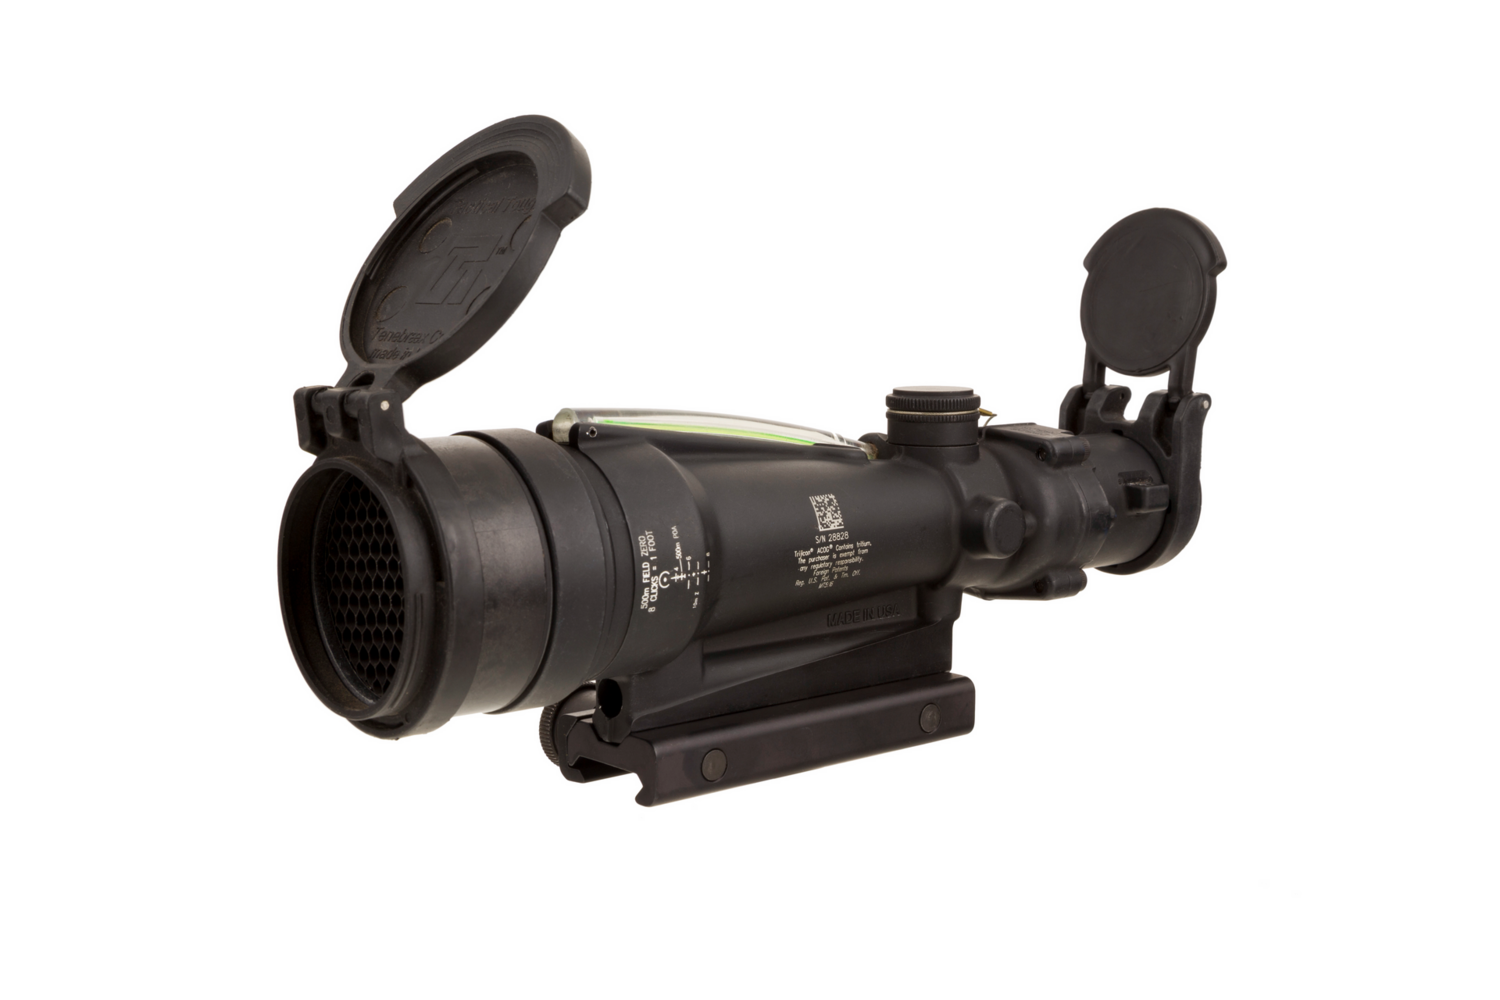 ACOG 3.5x35 BAC Riflescope - M249
Trijicon